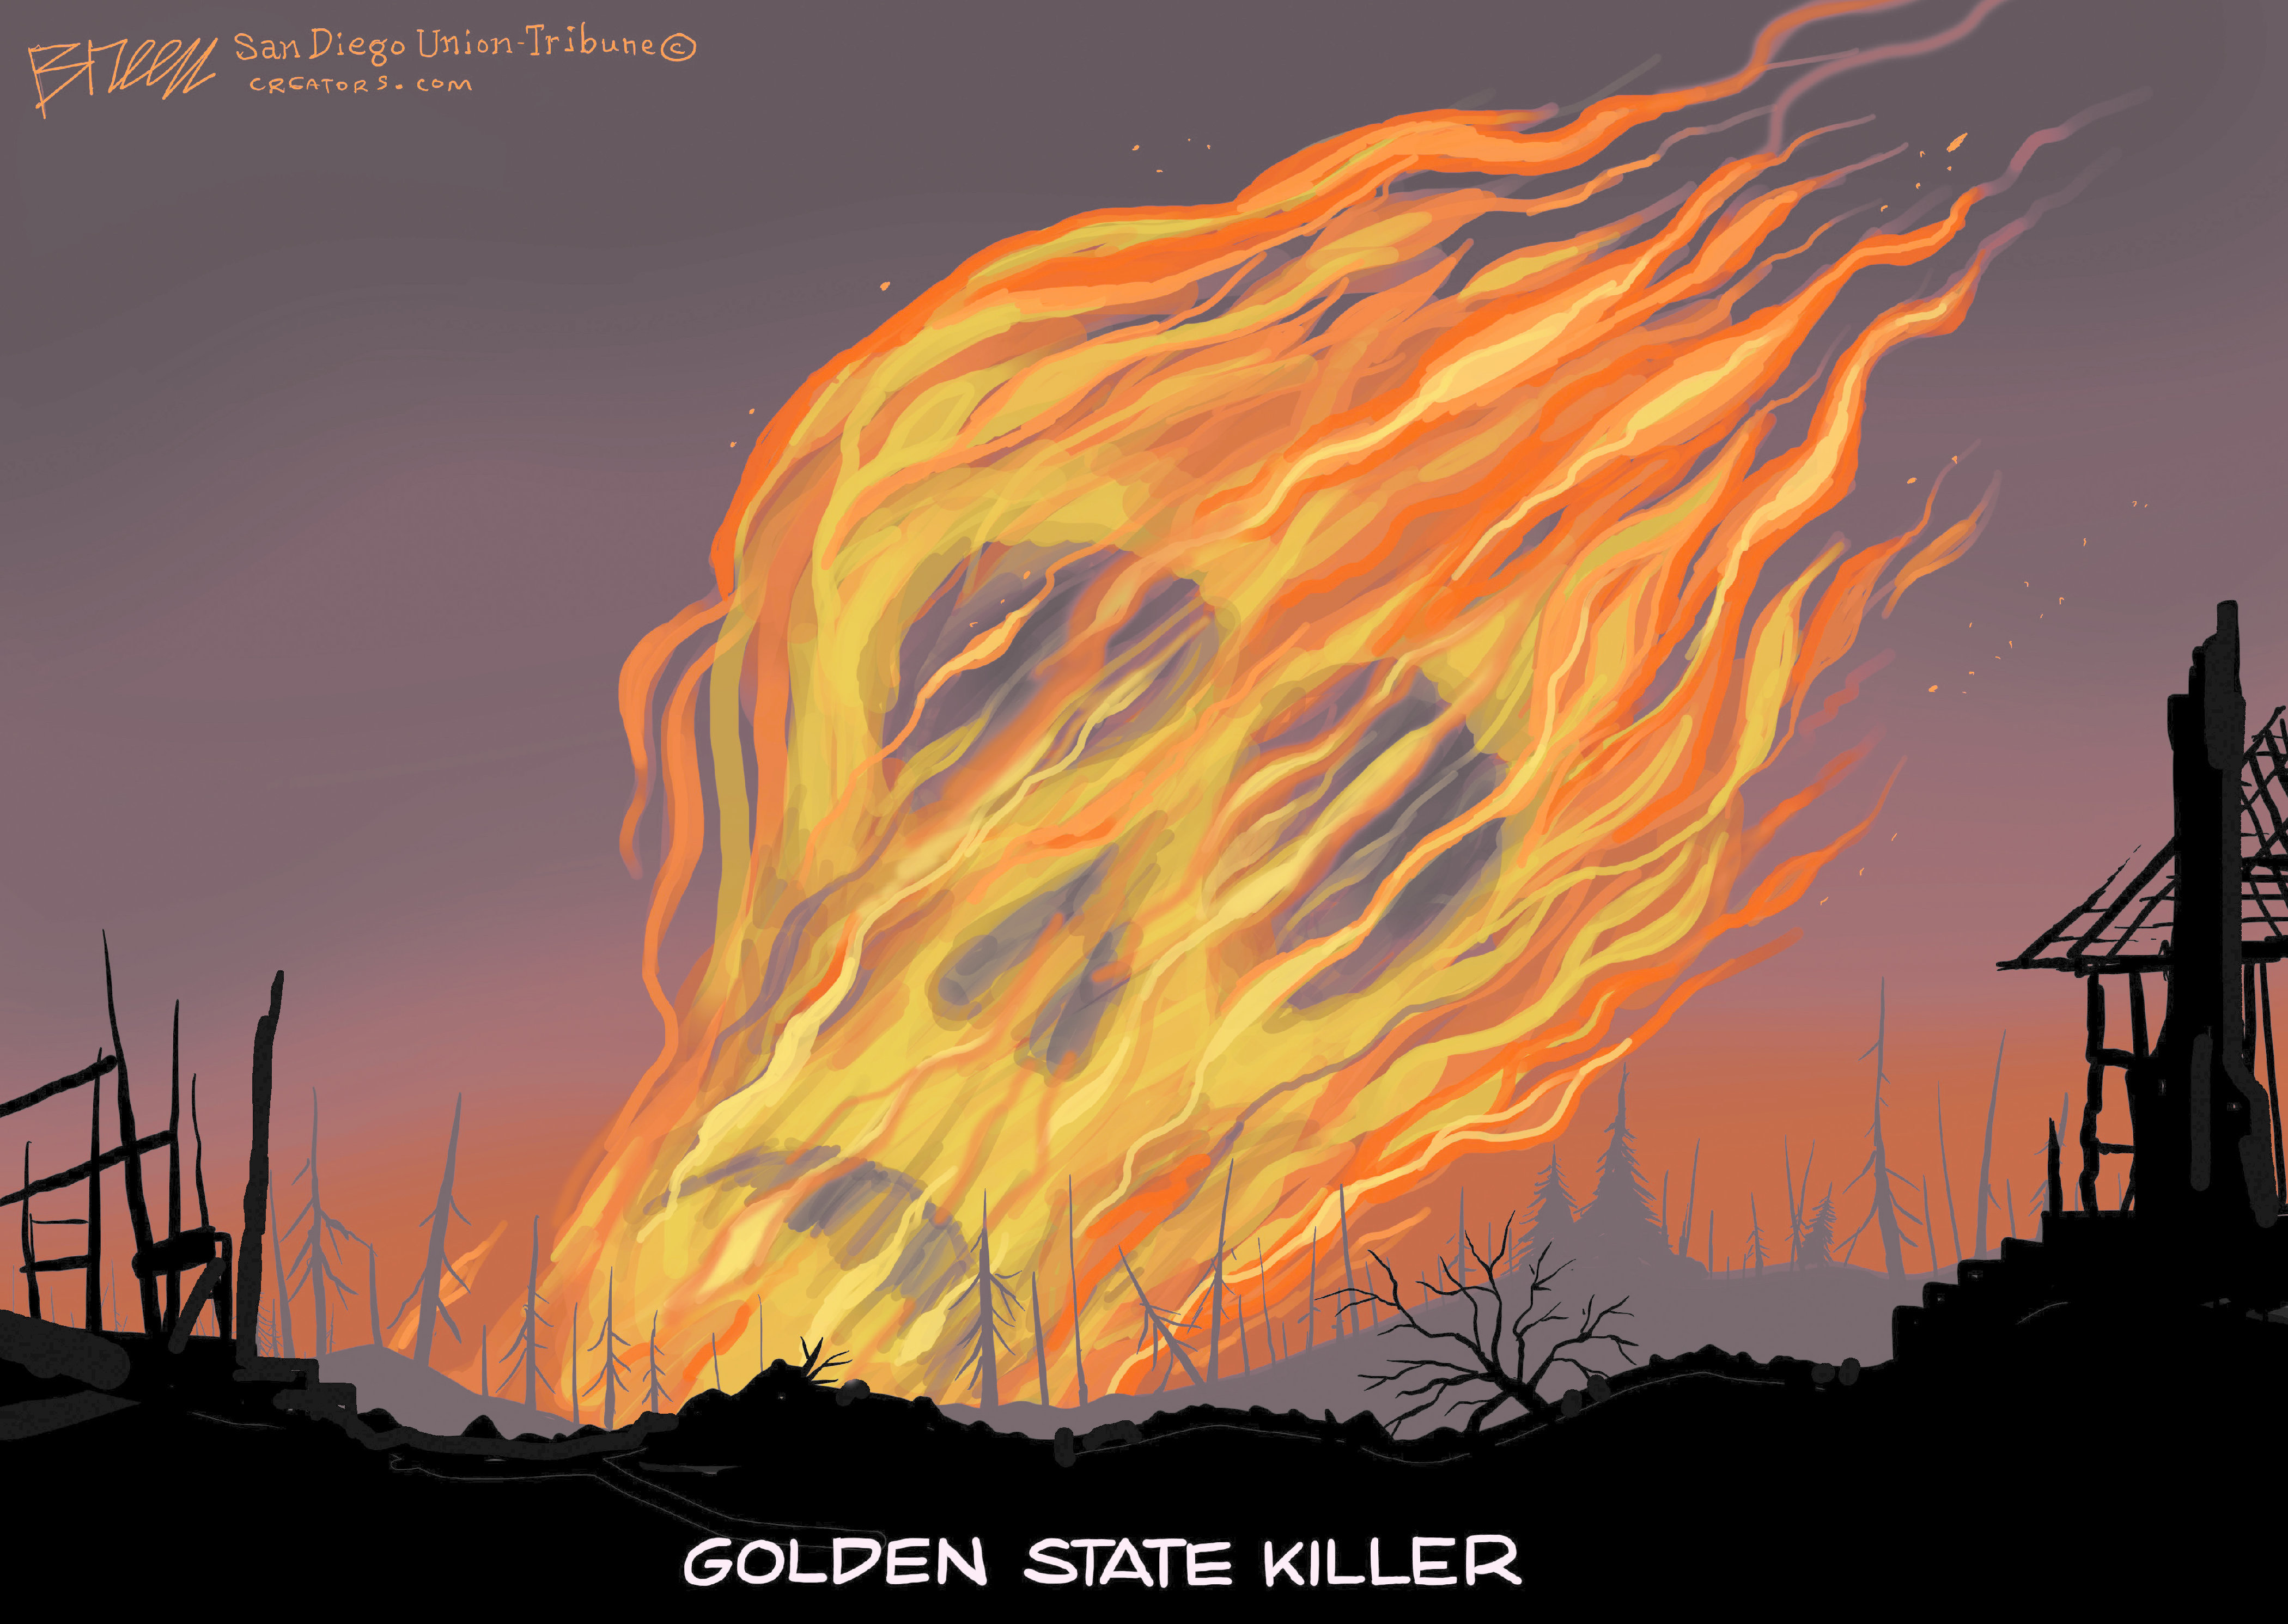 Editorial Cartoon U.S. California wildfires